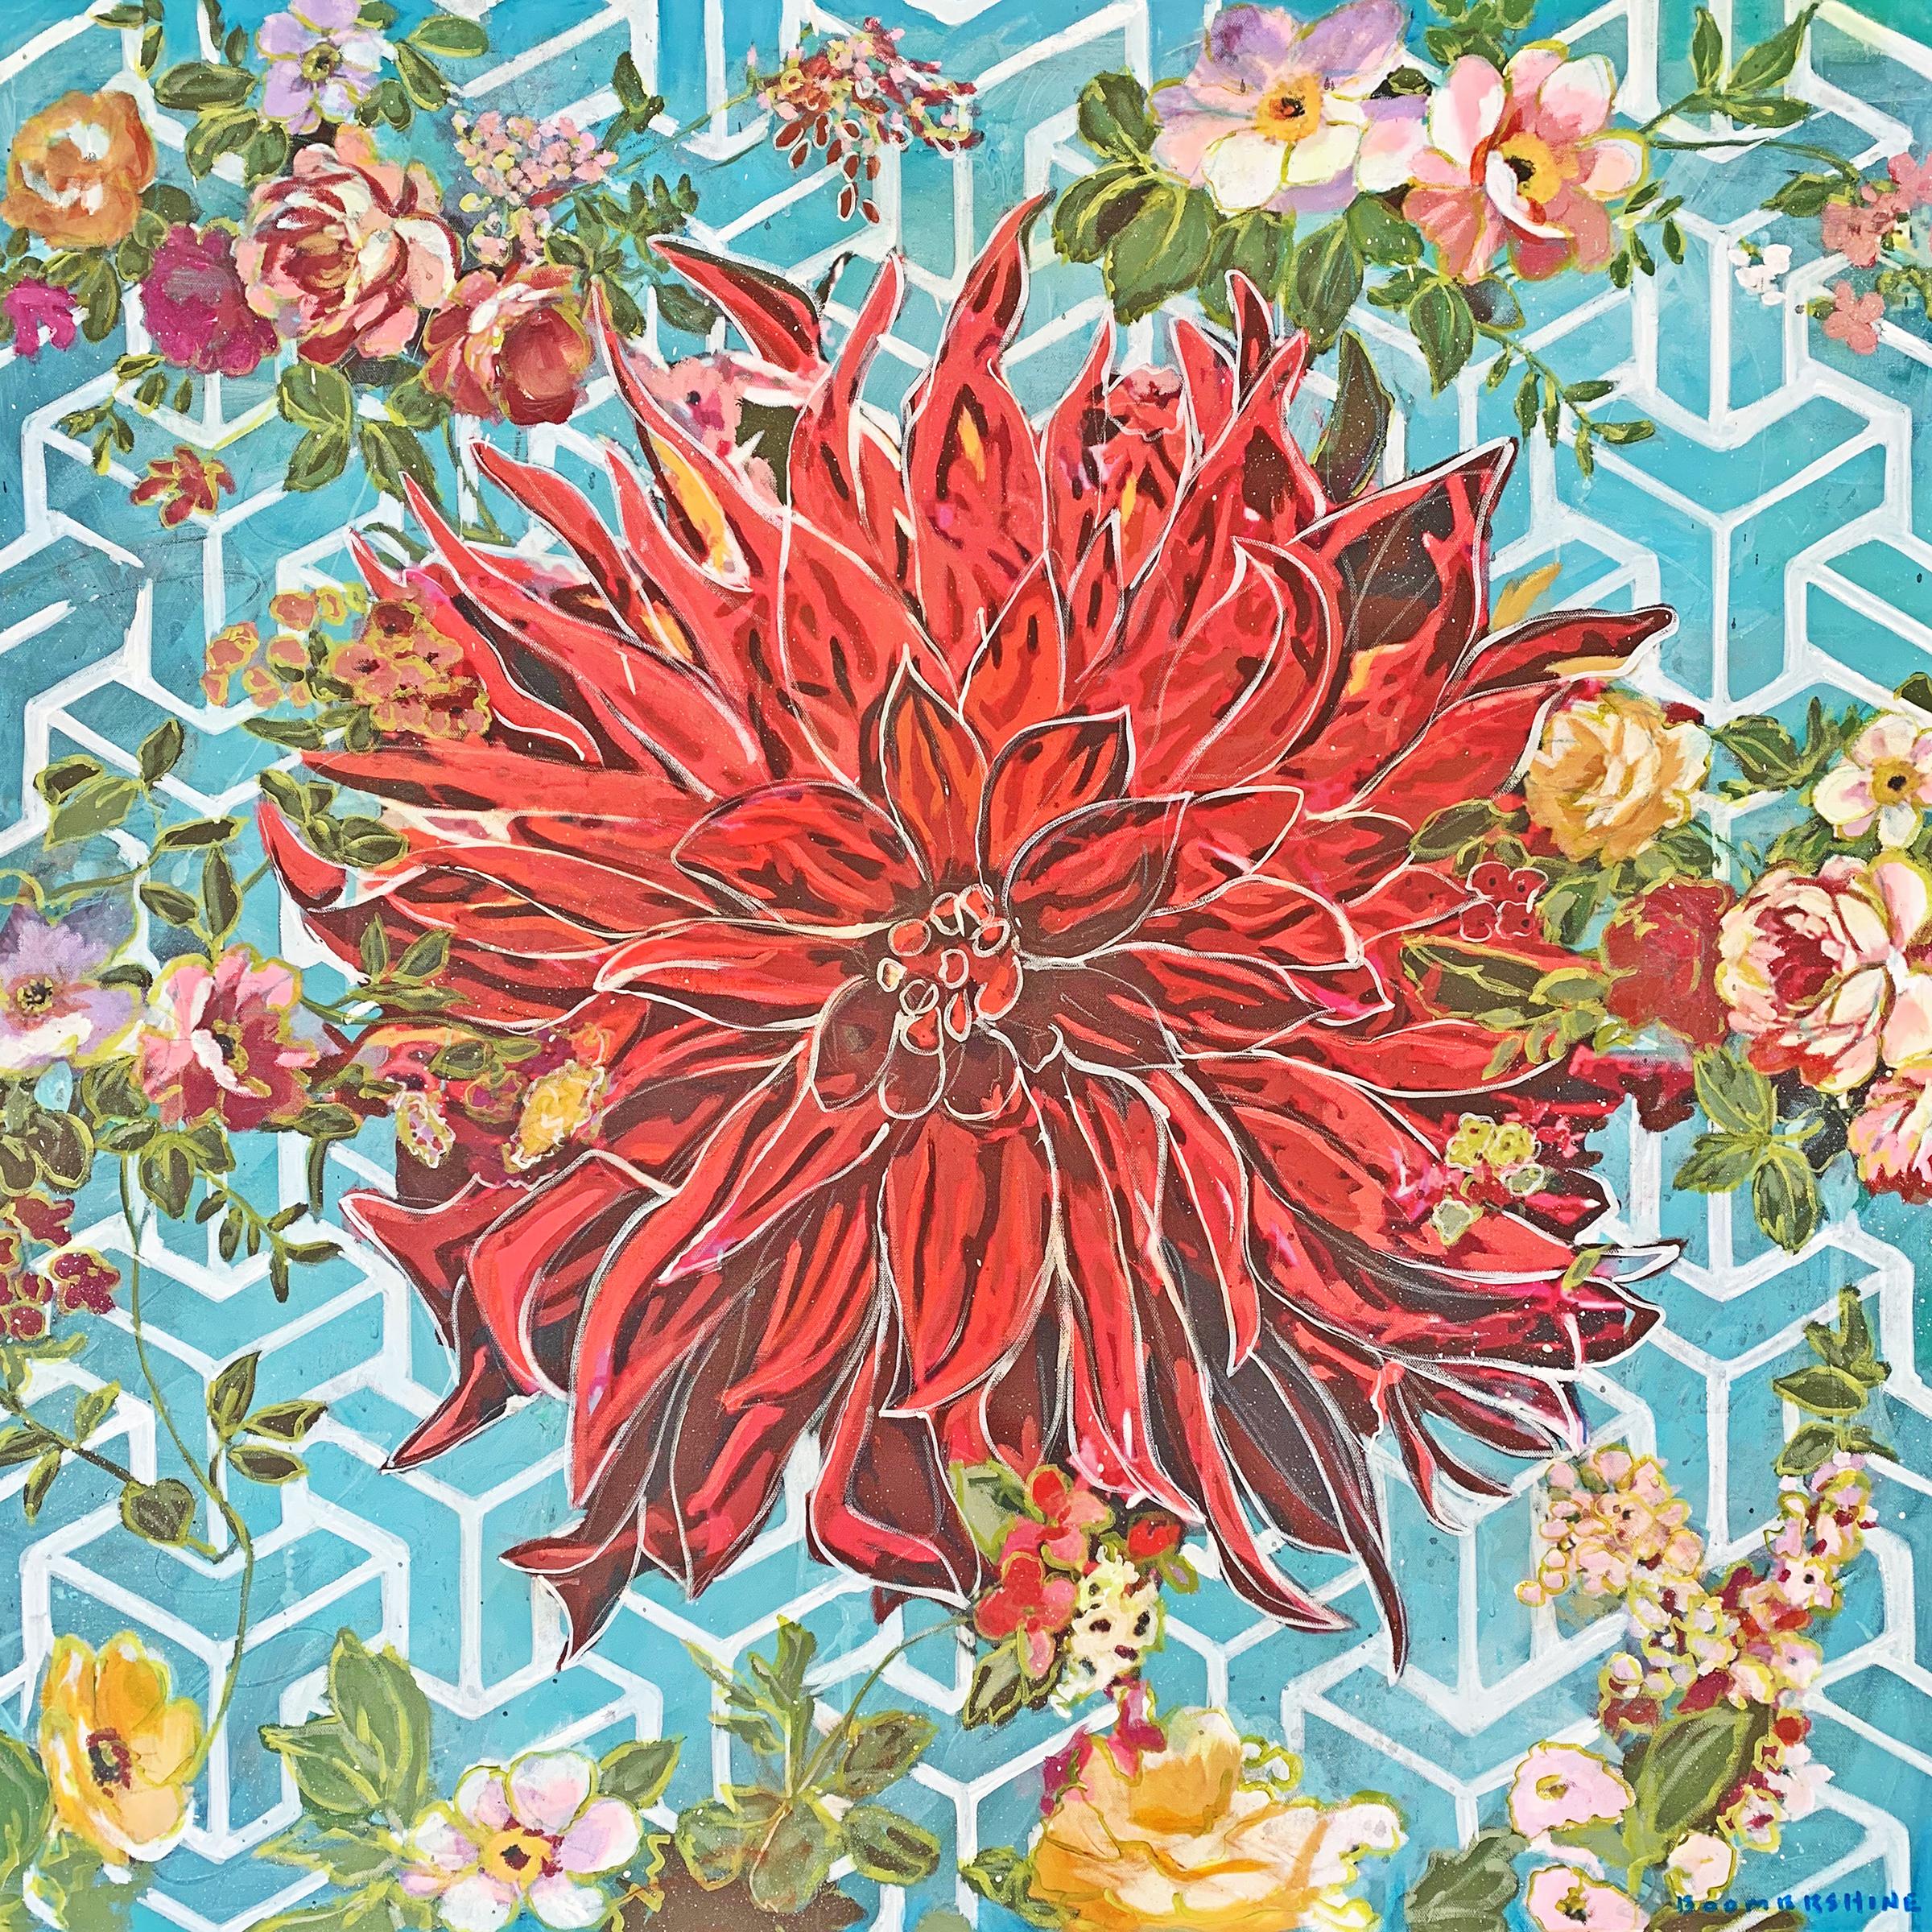 "Geo Teal" - Contemporary Op-Art Pop Art Paintings - Floral - Jasper Johns - Mixed Media Art by Mark Boomershine